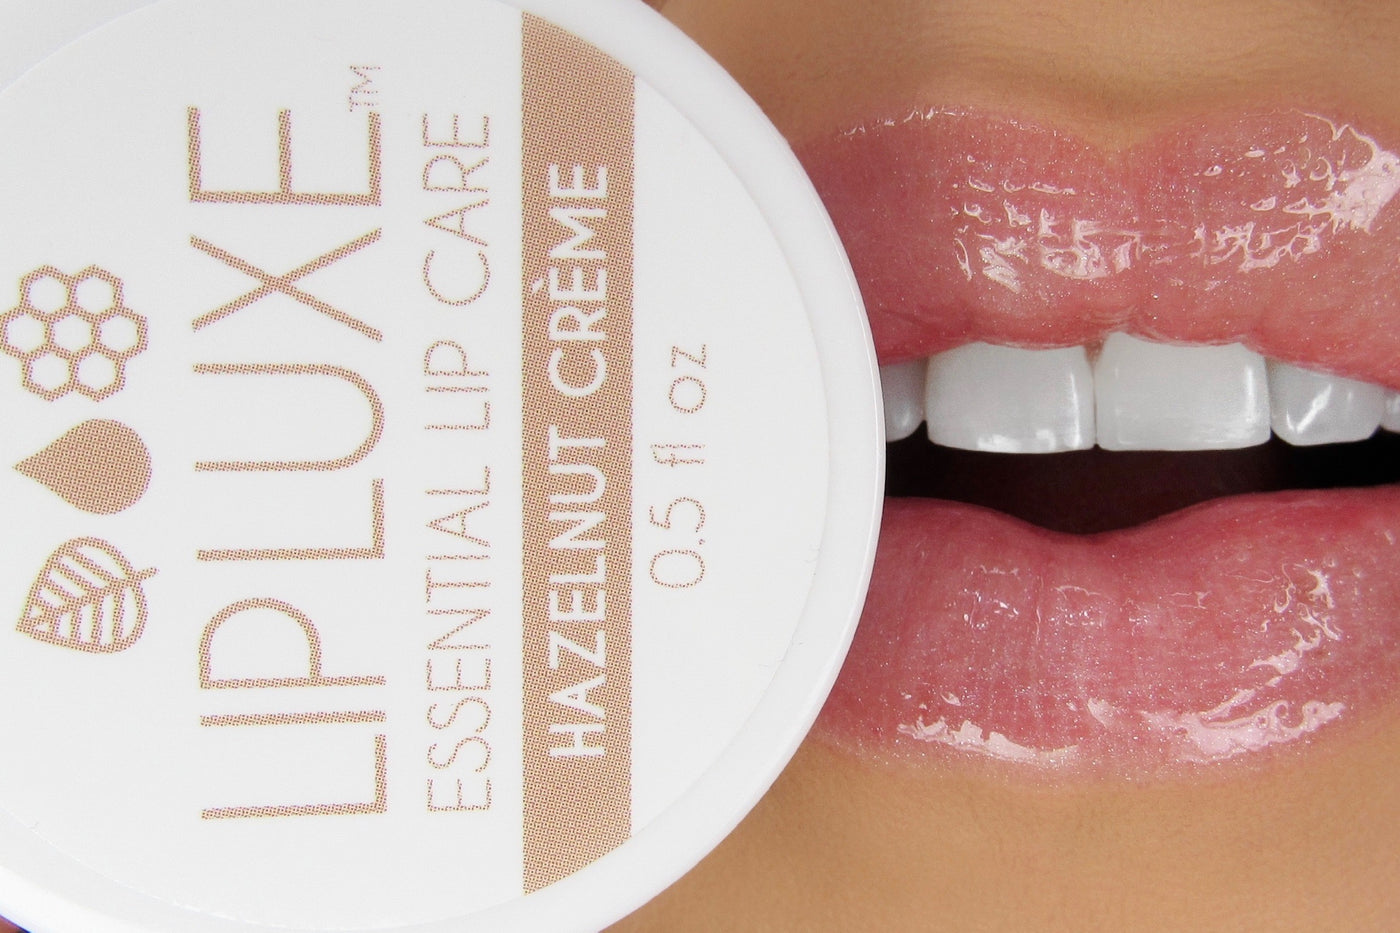 New! Hazelnut Creme Lip Balm